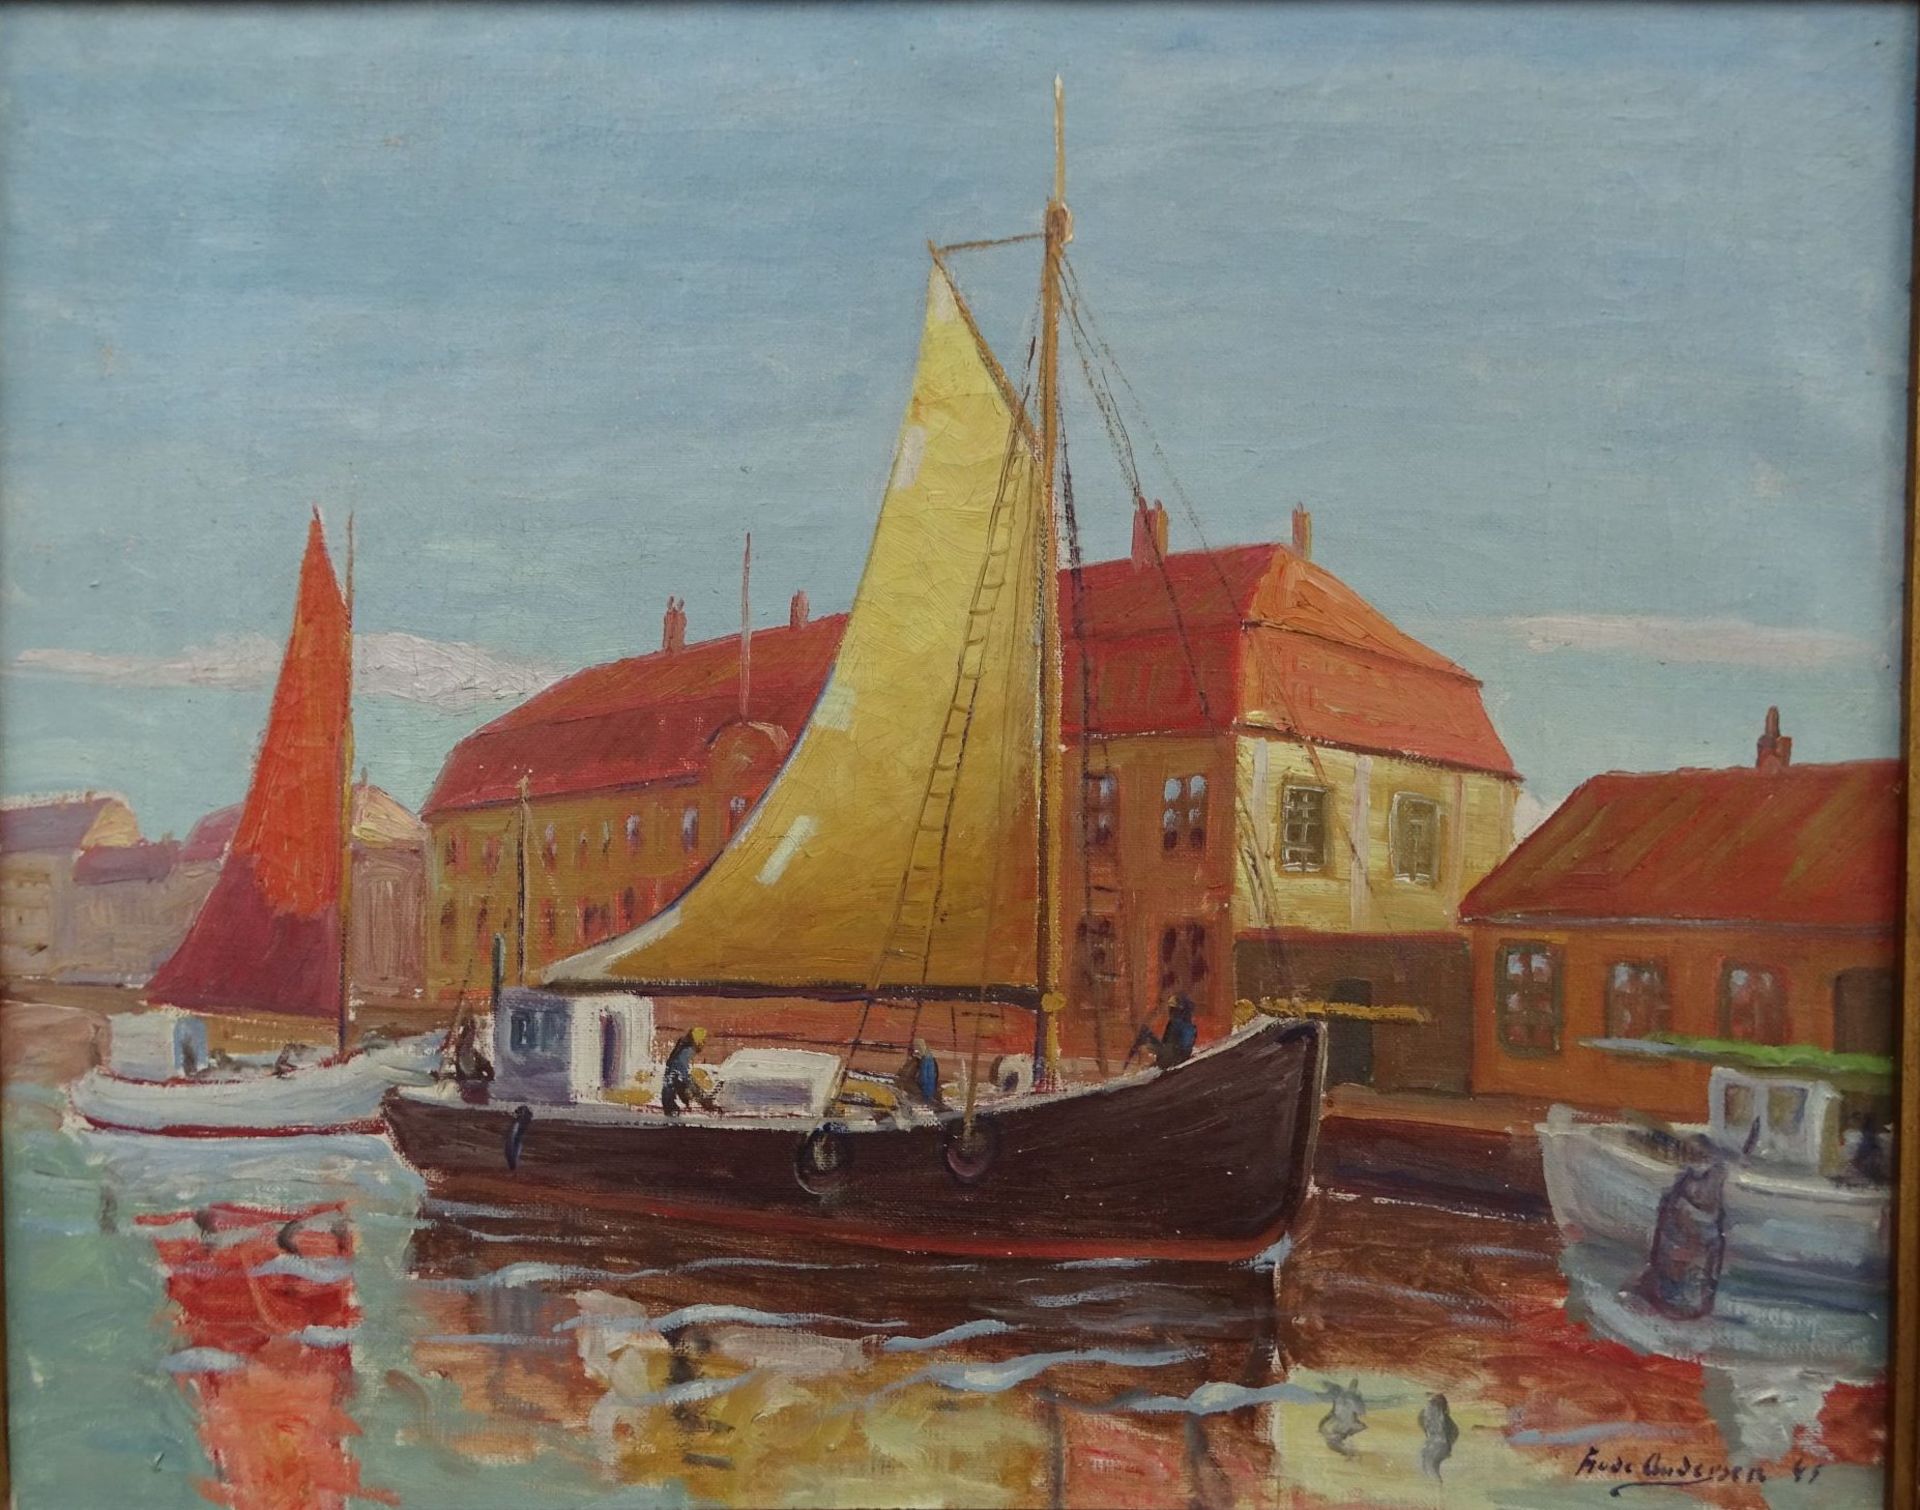 Trude Andersen, 1946 "Lastensegler im Kanal", Öl/Leinen, gerahmt, RG 78x93 c- - -22.61 % buyer's